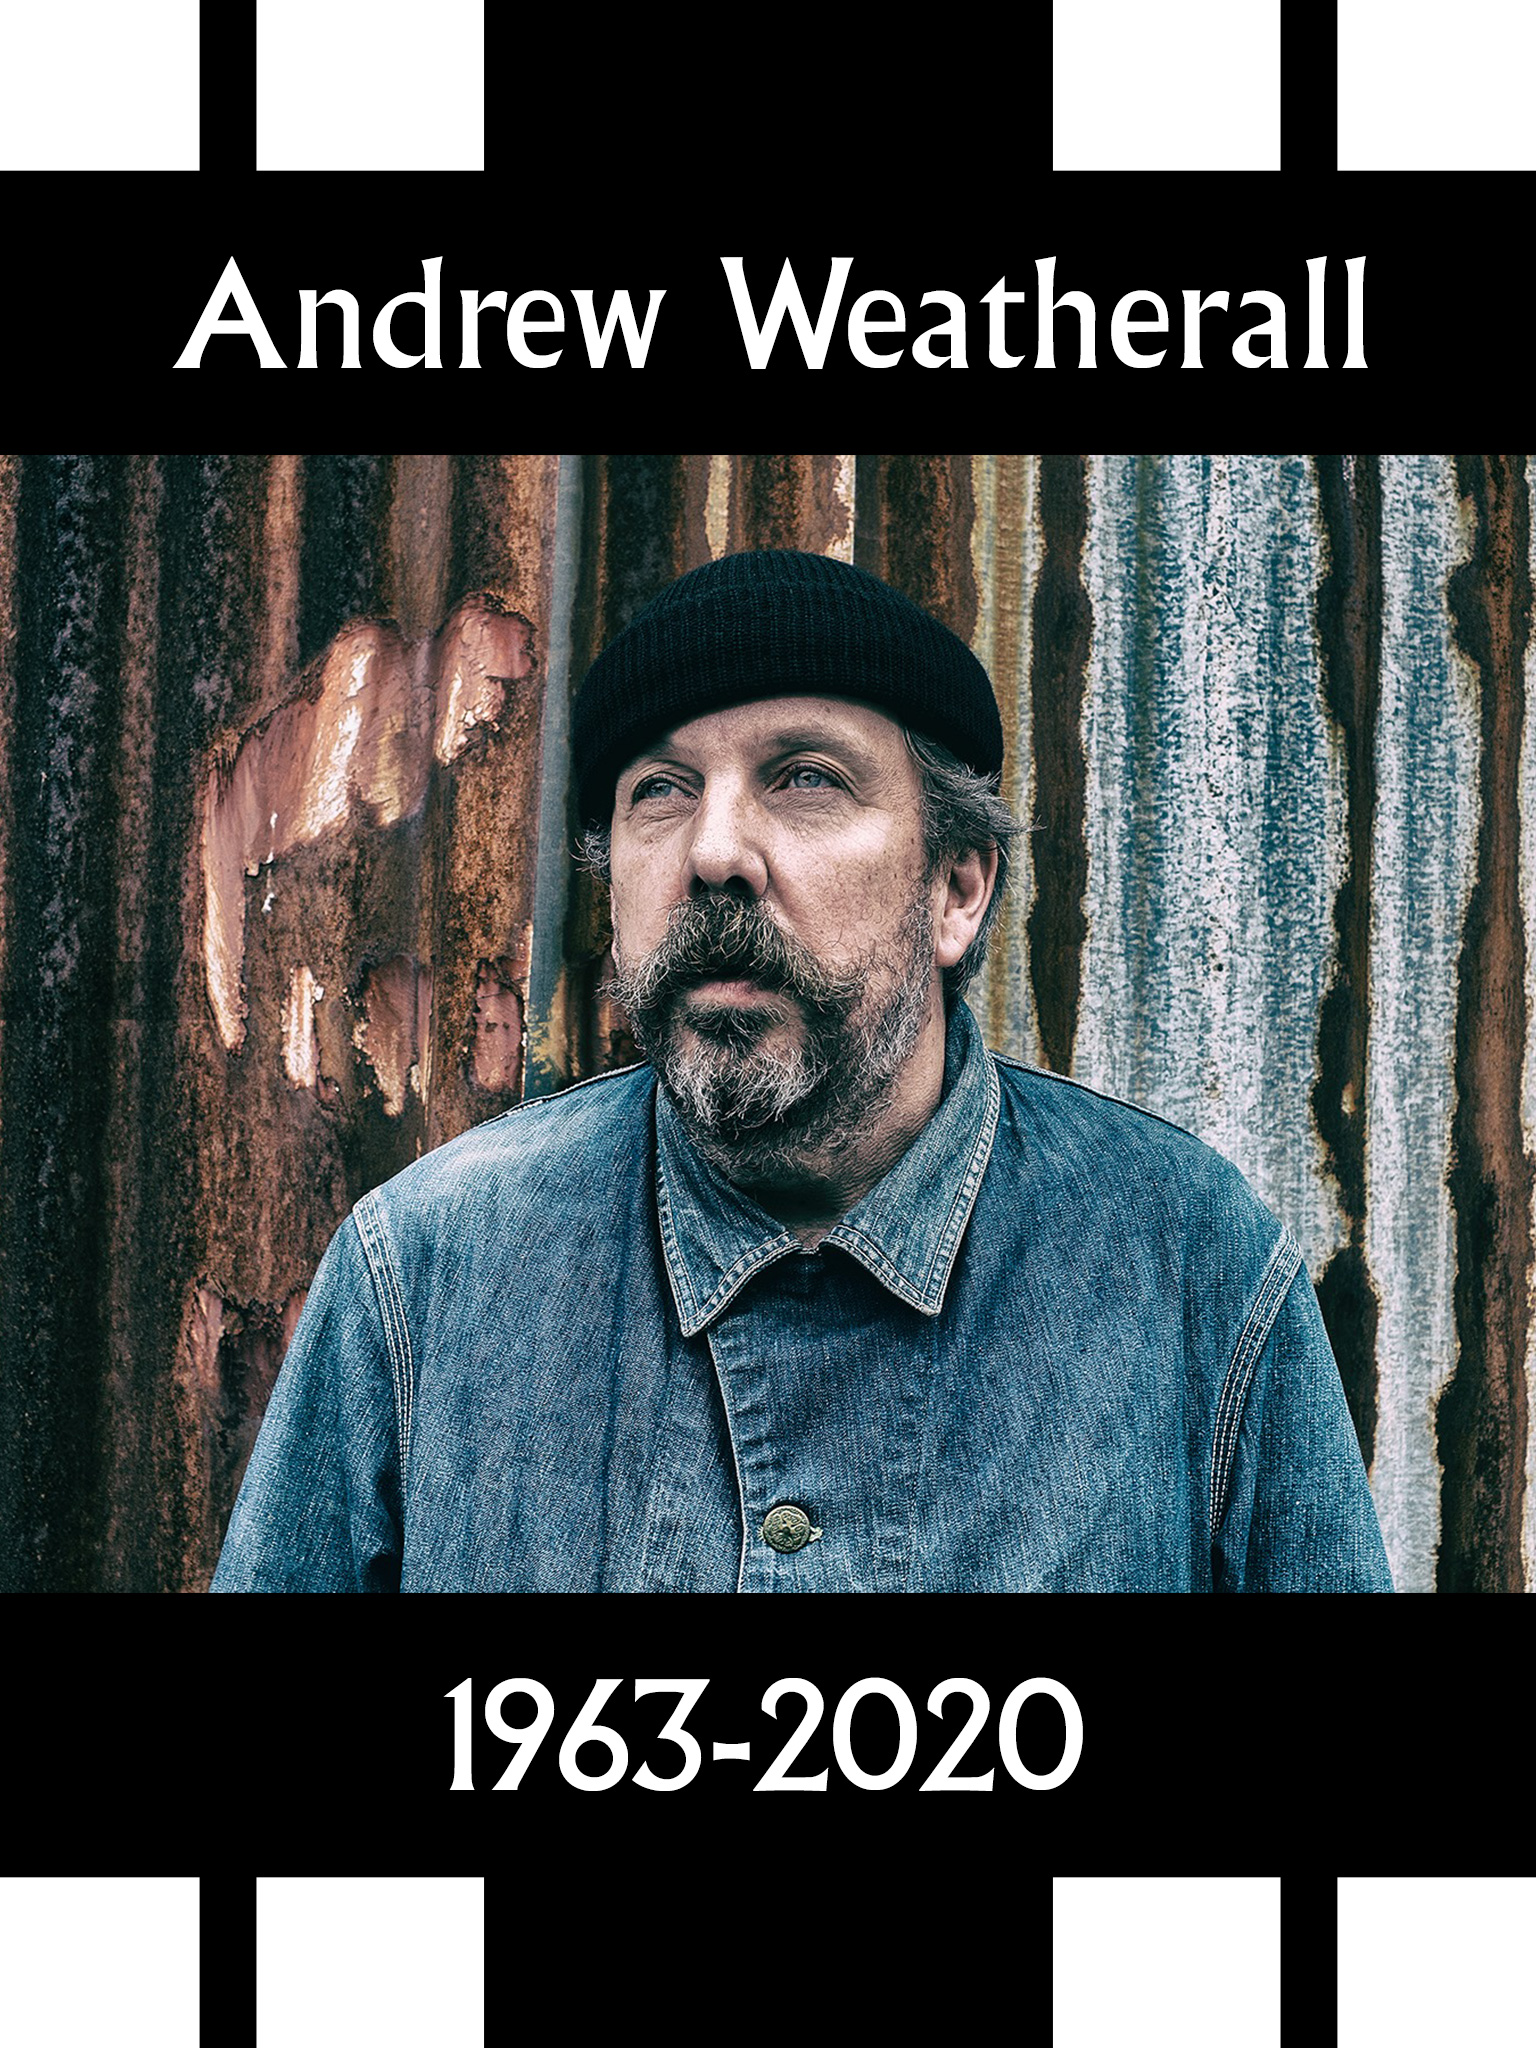 Remembering Andrew Weatherall, A Lifelong Maverick